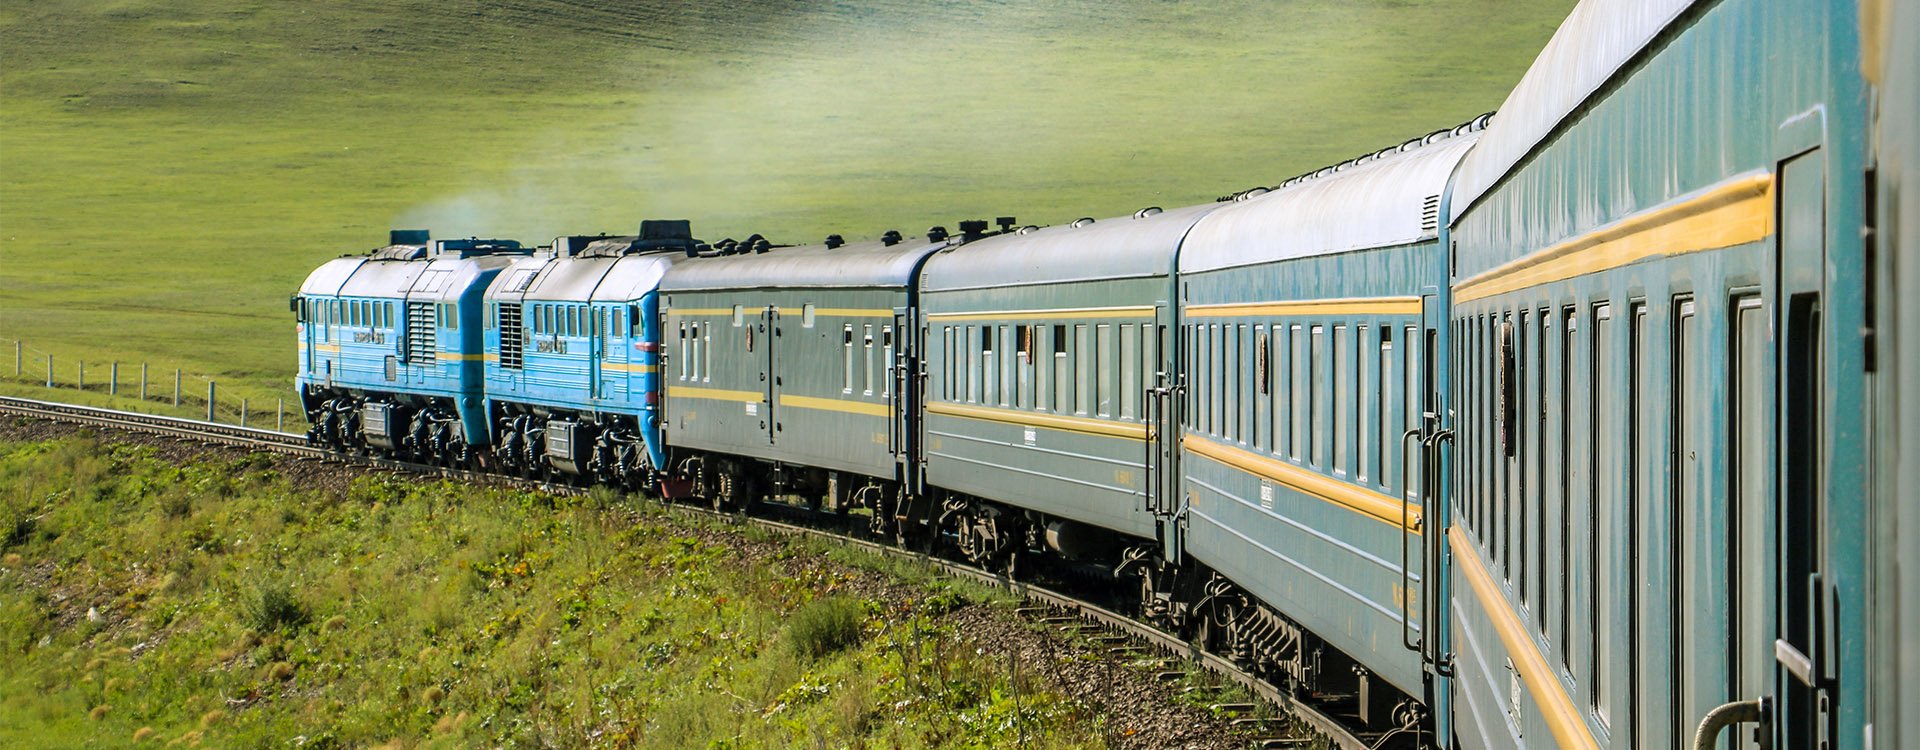 Transsiberian Railway with locomotive and steam crossing through Ulaanbaatar, Mongolia